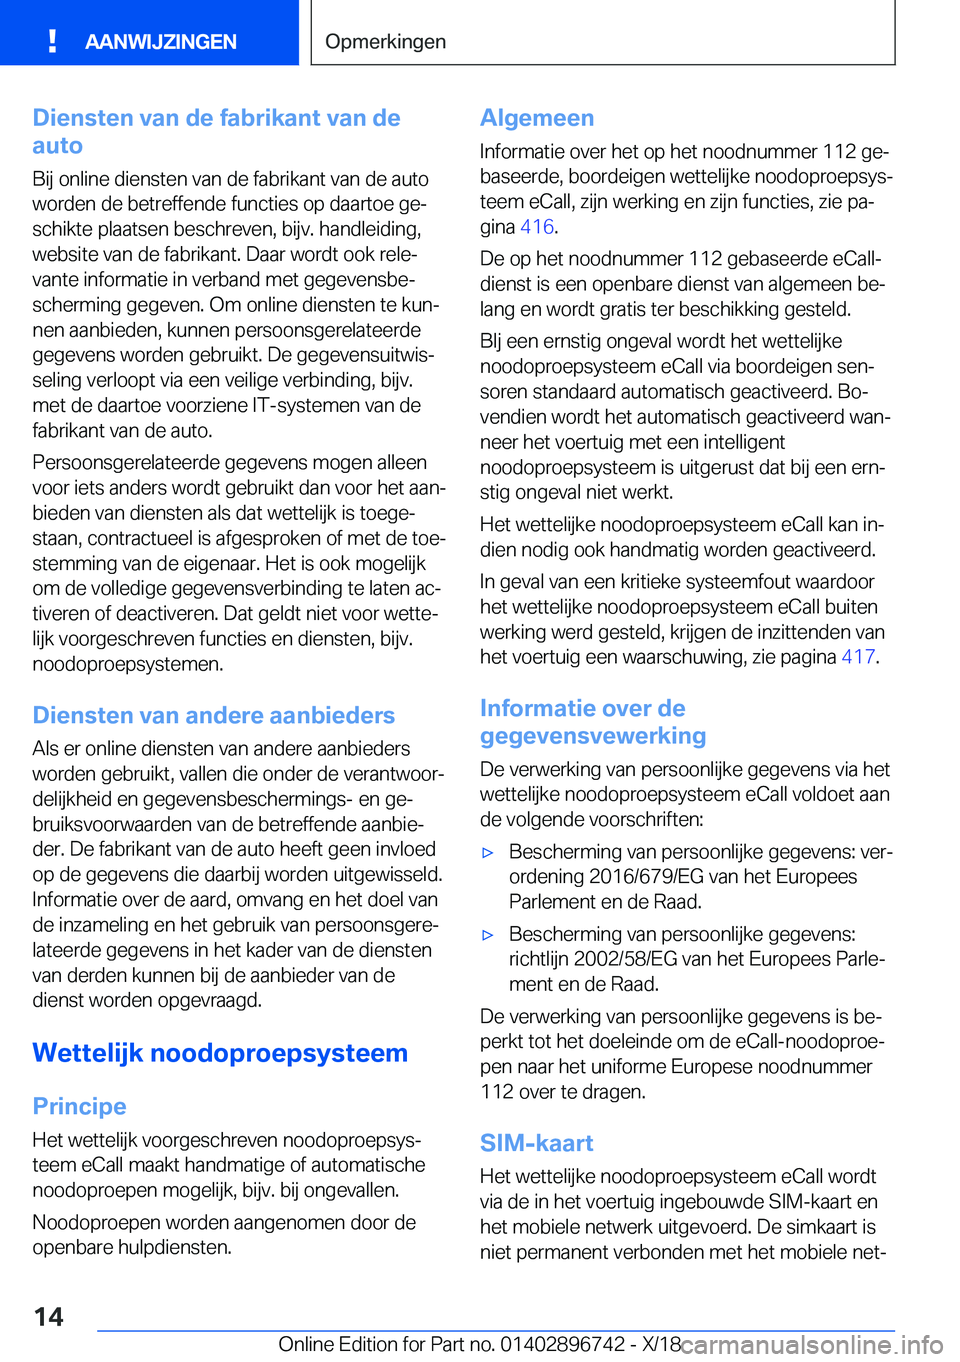 BMW X5 2019  Instructieboekjes (in Dutch) �D�i�e�n�s�t�e�n��v�a�n��d�e��f�a�b�r�i�k�a�n�t��v�a�n��d�e
�a�u�t�o
�B�i�j��o�n�l�i�n�e��d�i�e�n�s�t�e�n��v�a�n��d�e��f�a�b�r�i�k�a�n�t��v�a�n��d�e��a�u�t�o�w�o�r�d�e�n��d�e��b�e�t�r�e